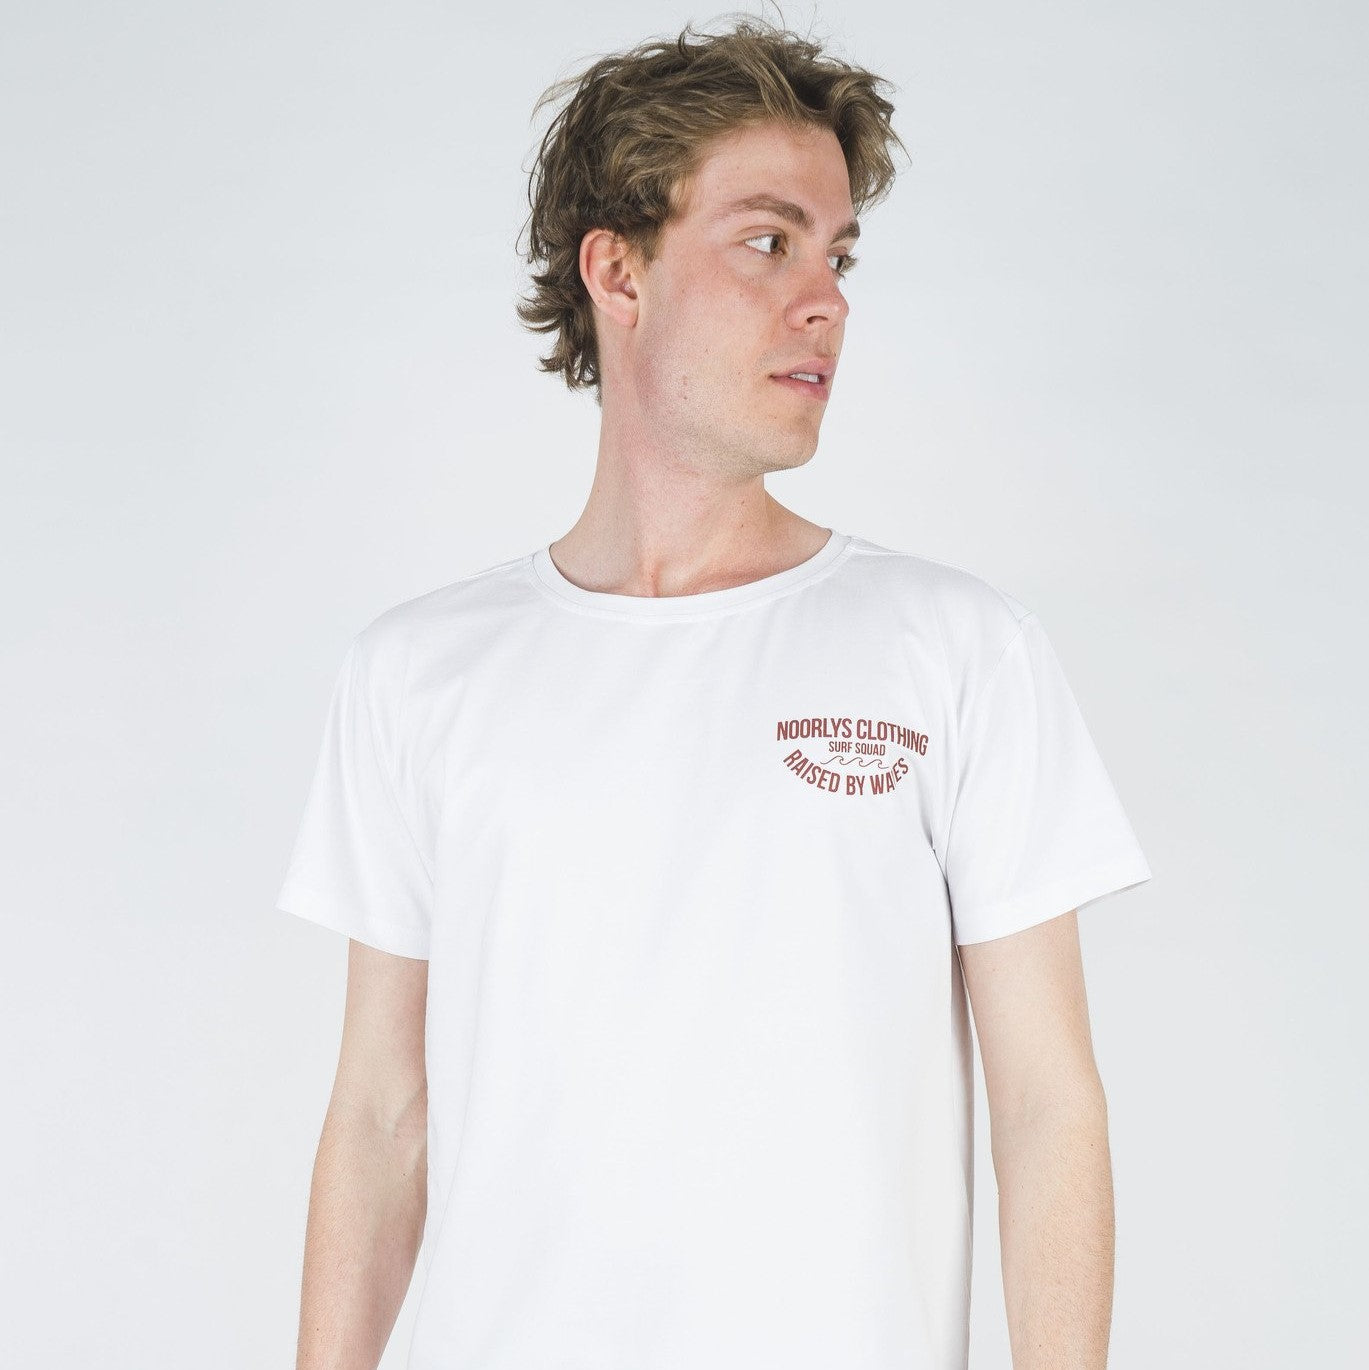 Noorlys_T-Shirt DRIFT White_1